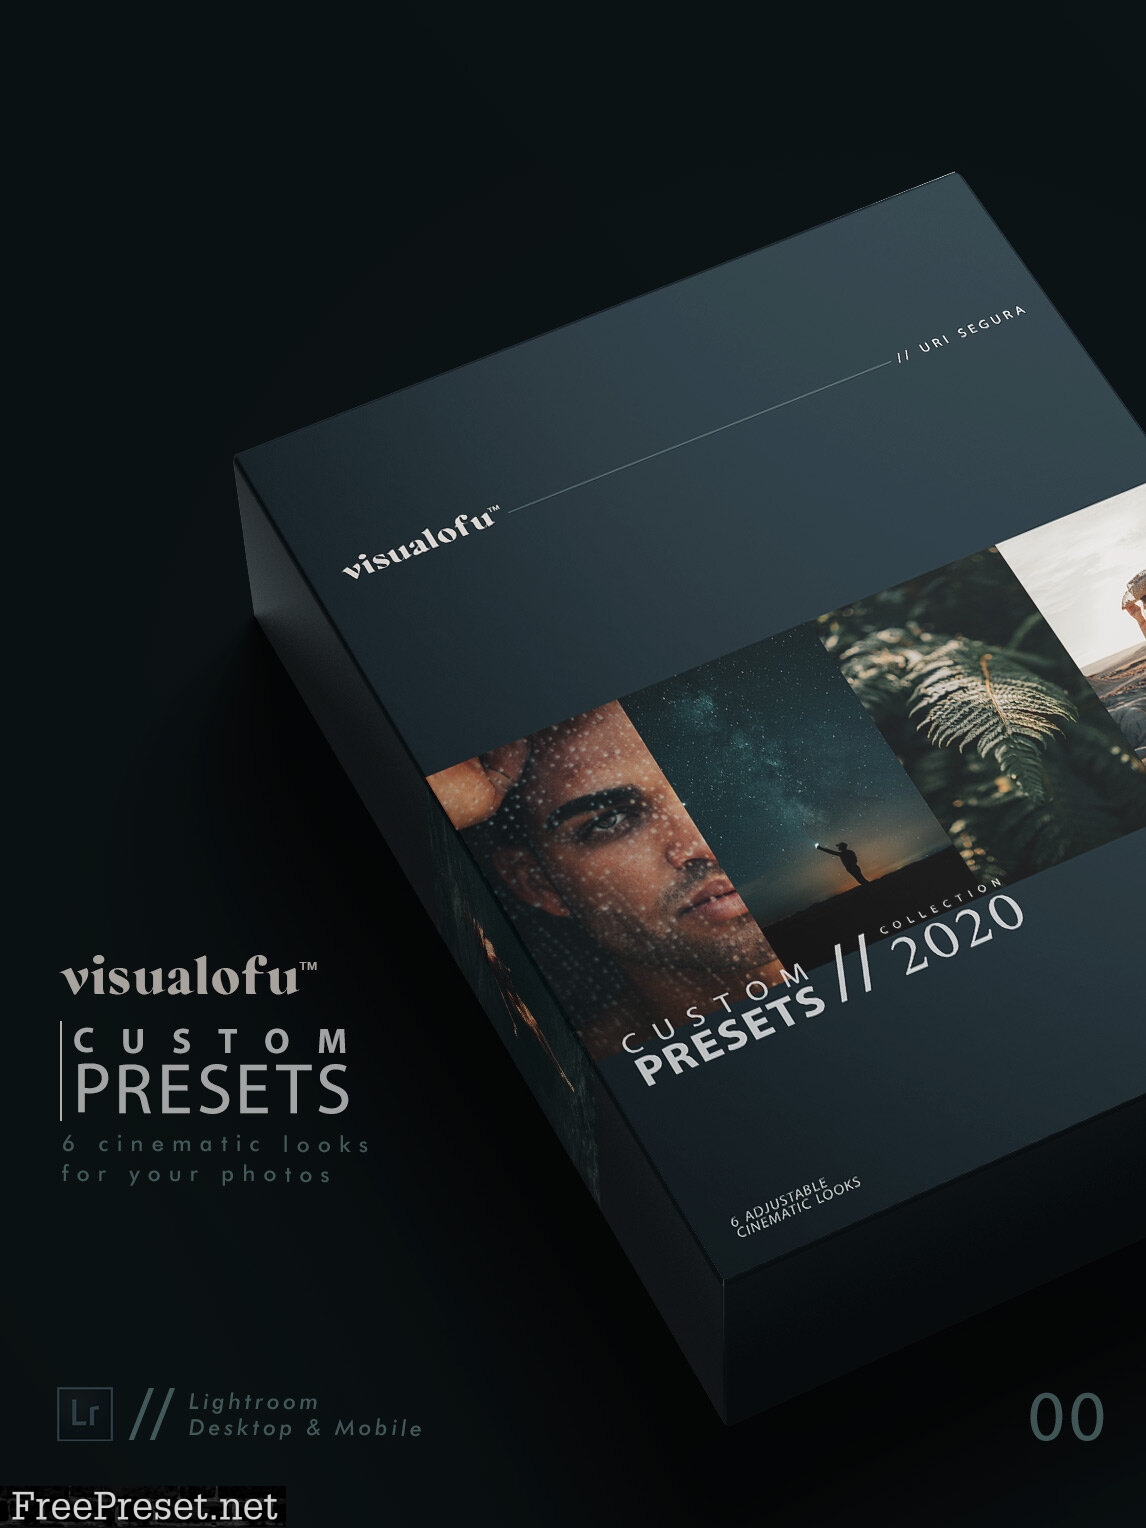 Visualofu Custom Desktop & Mobile Presets 2020